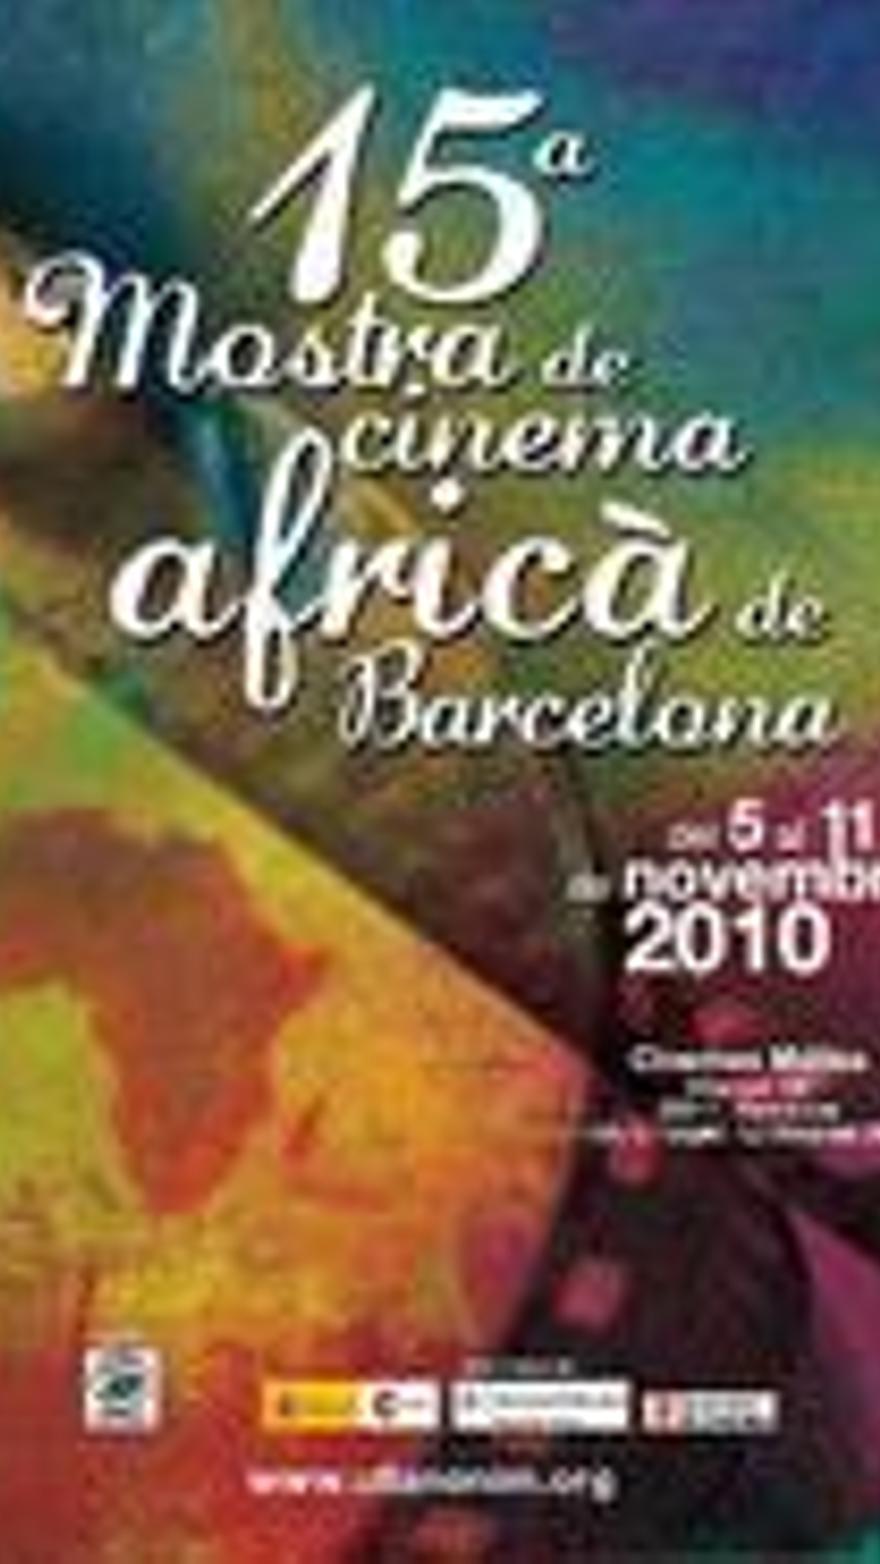 15ª mostra de cinema africà de Barcelona 2010